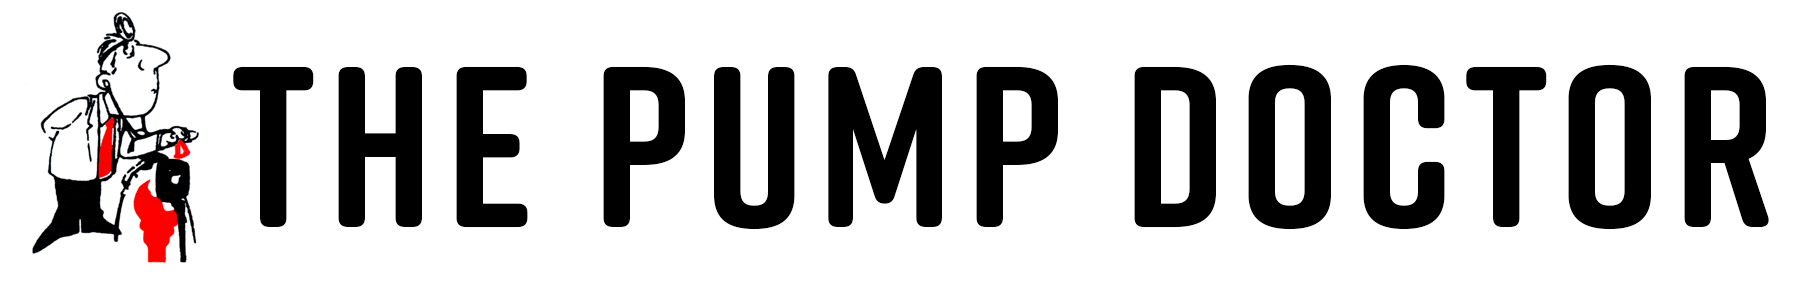 The Pump Doctor, Inc.Logo